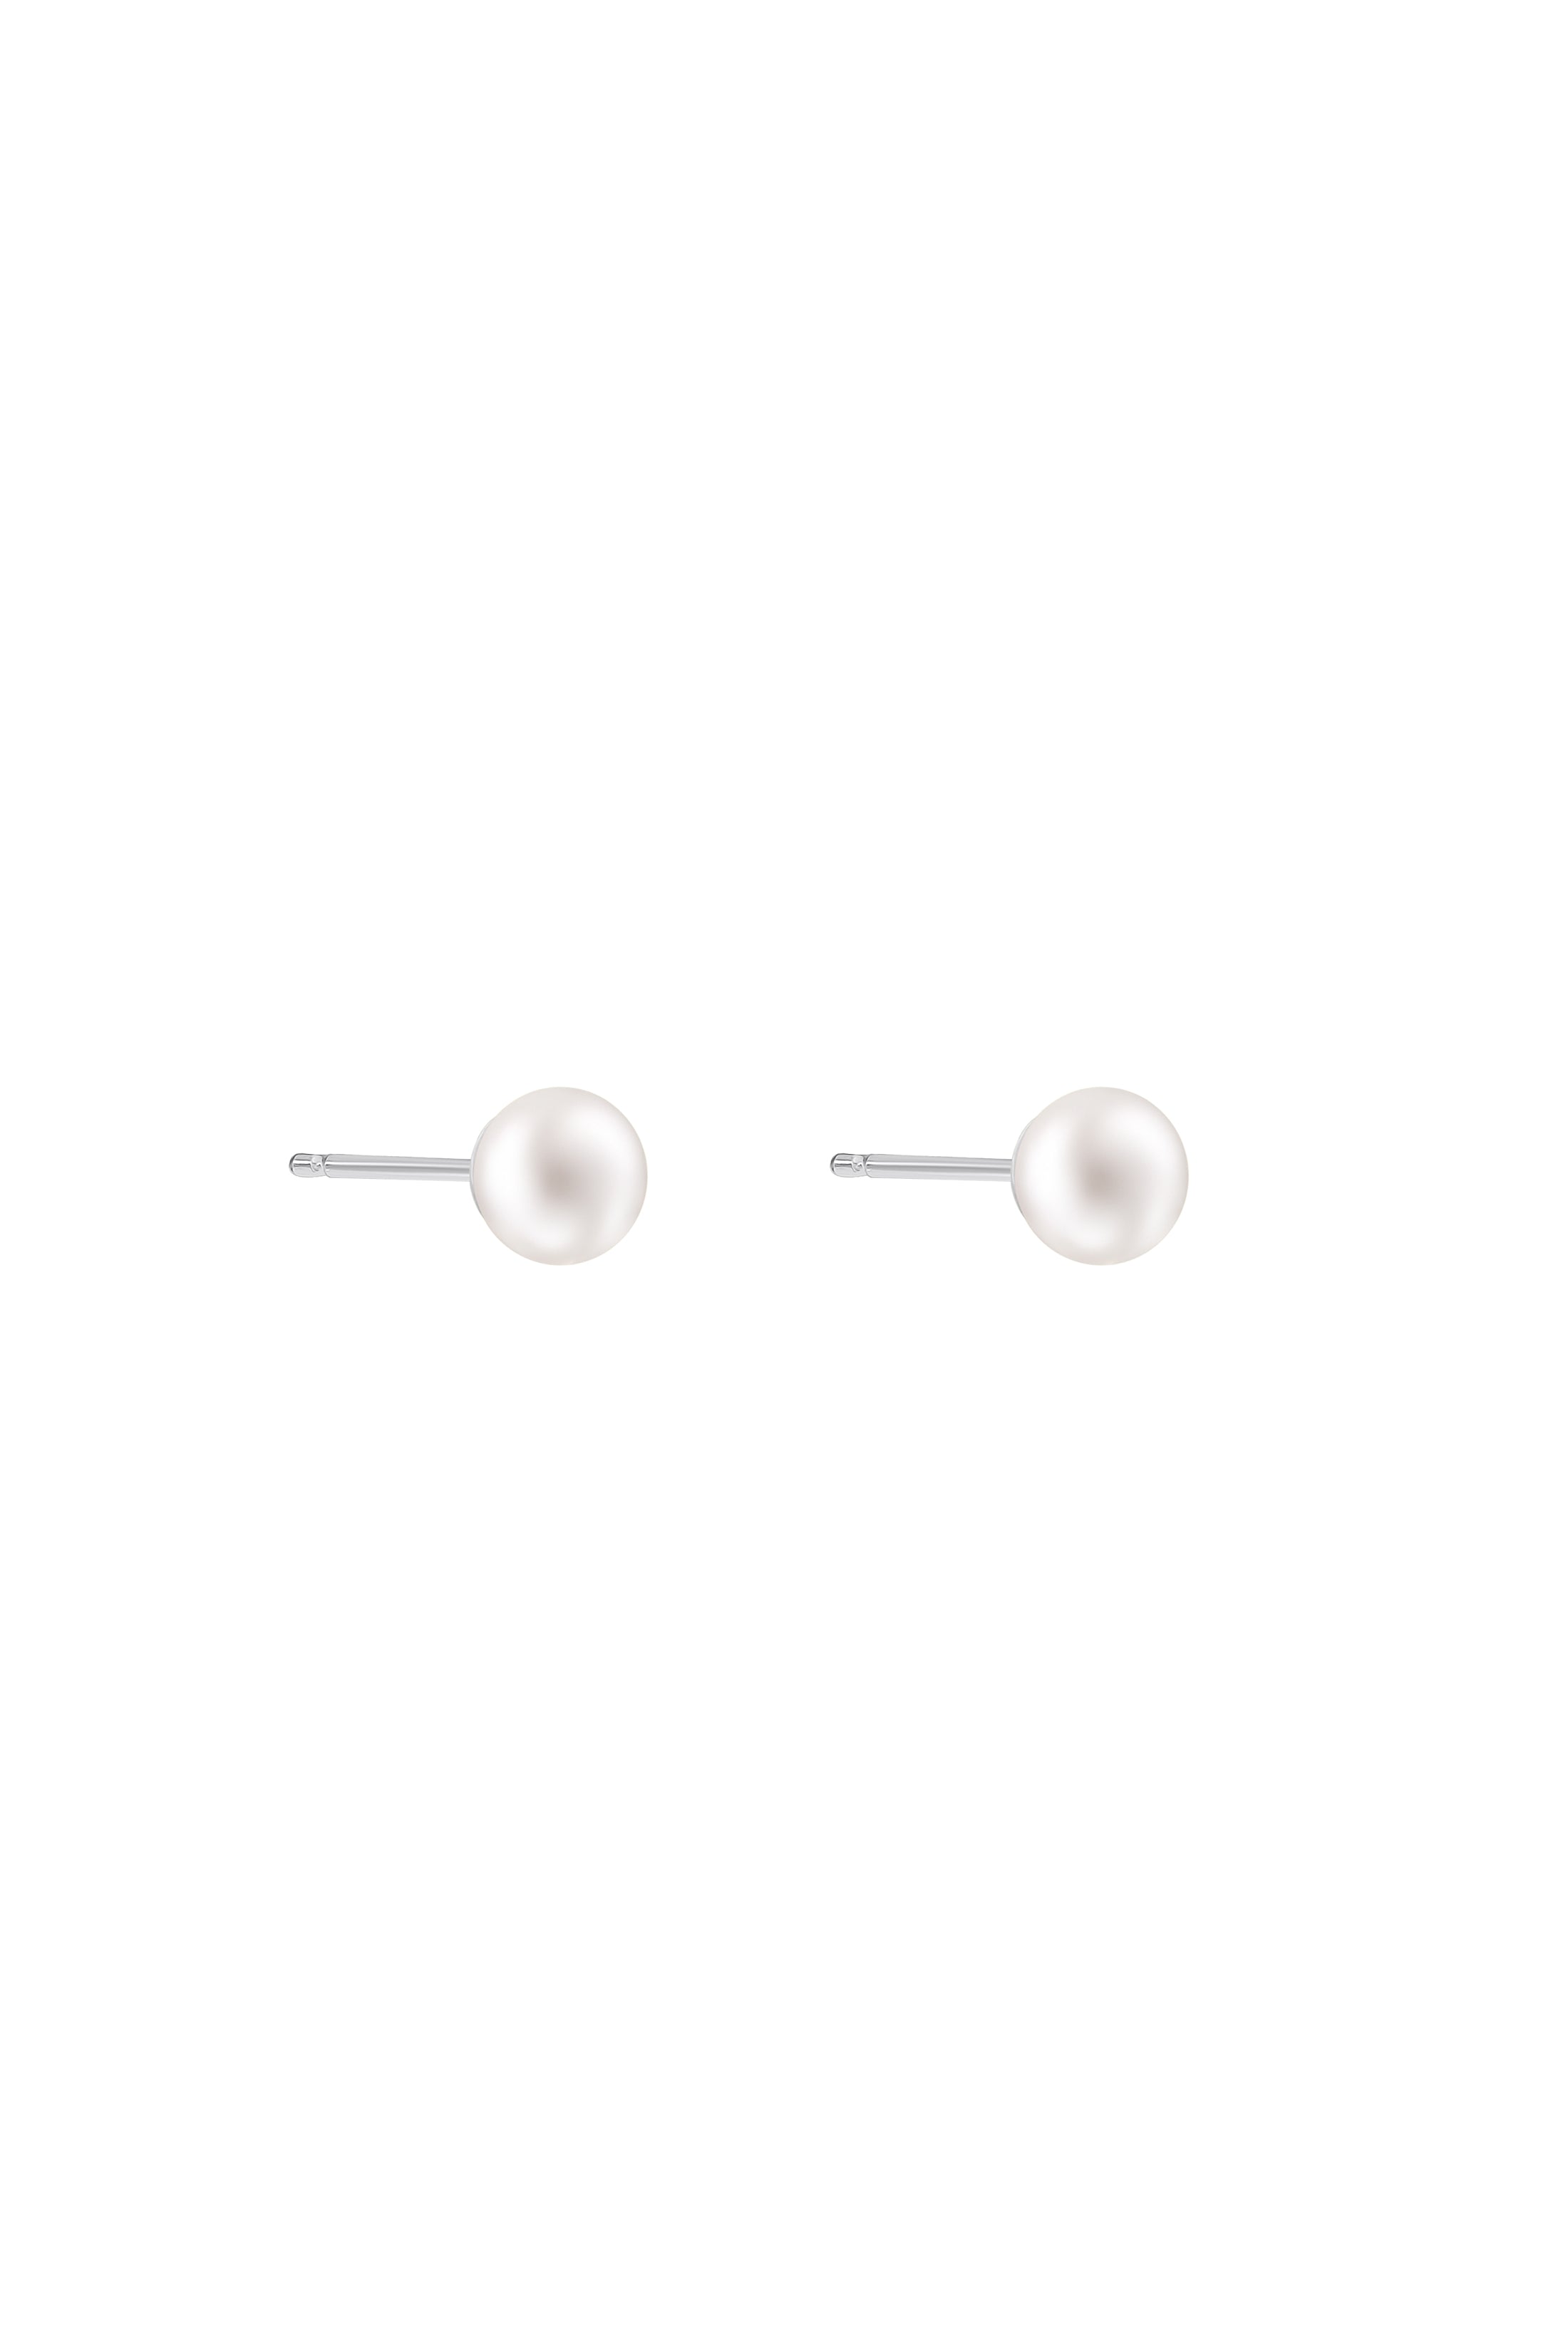 5MM FreshWater Pearl Stud Earring Set